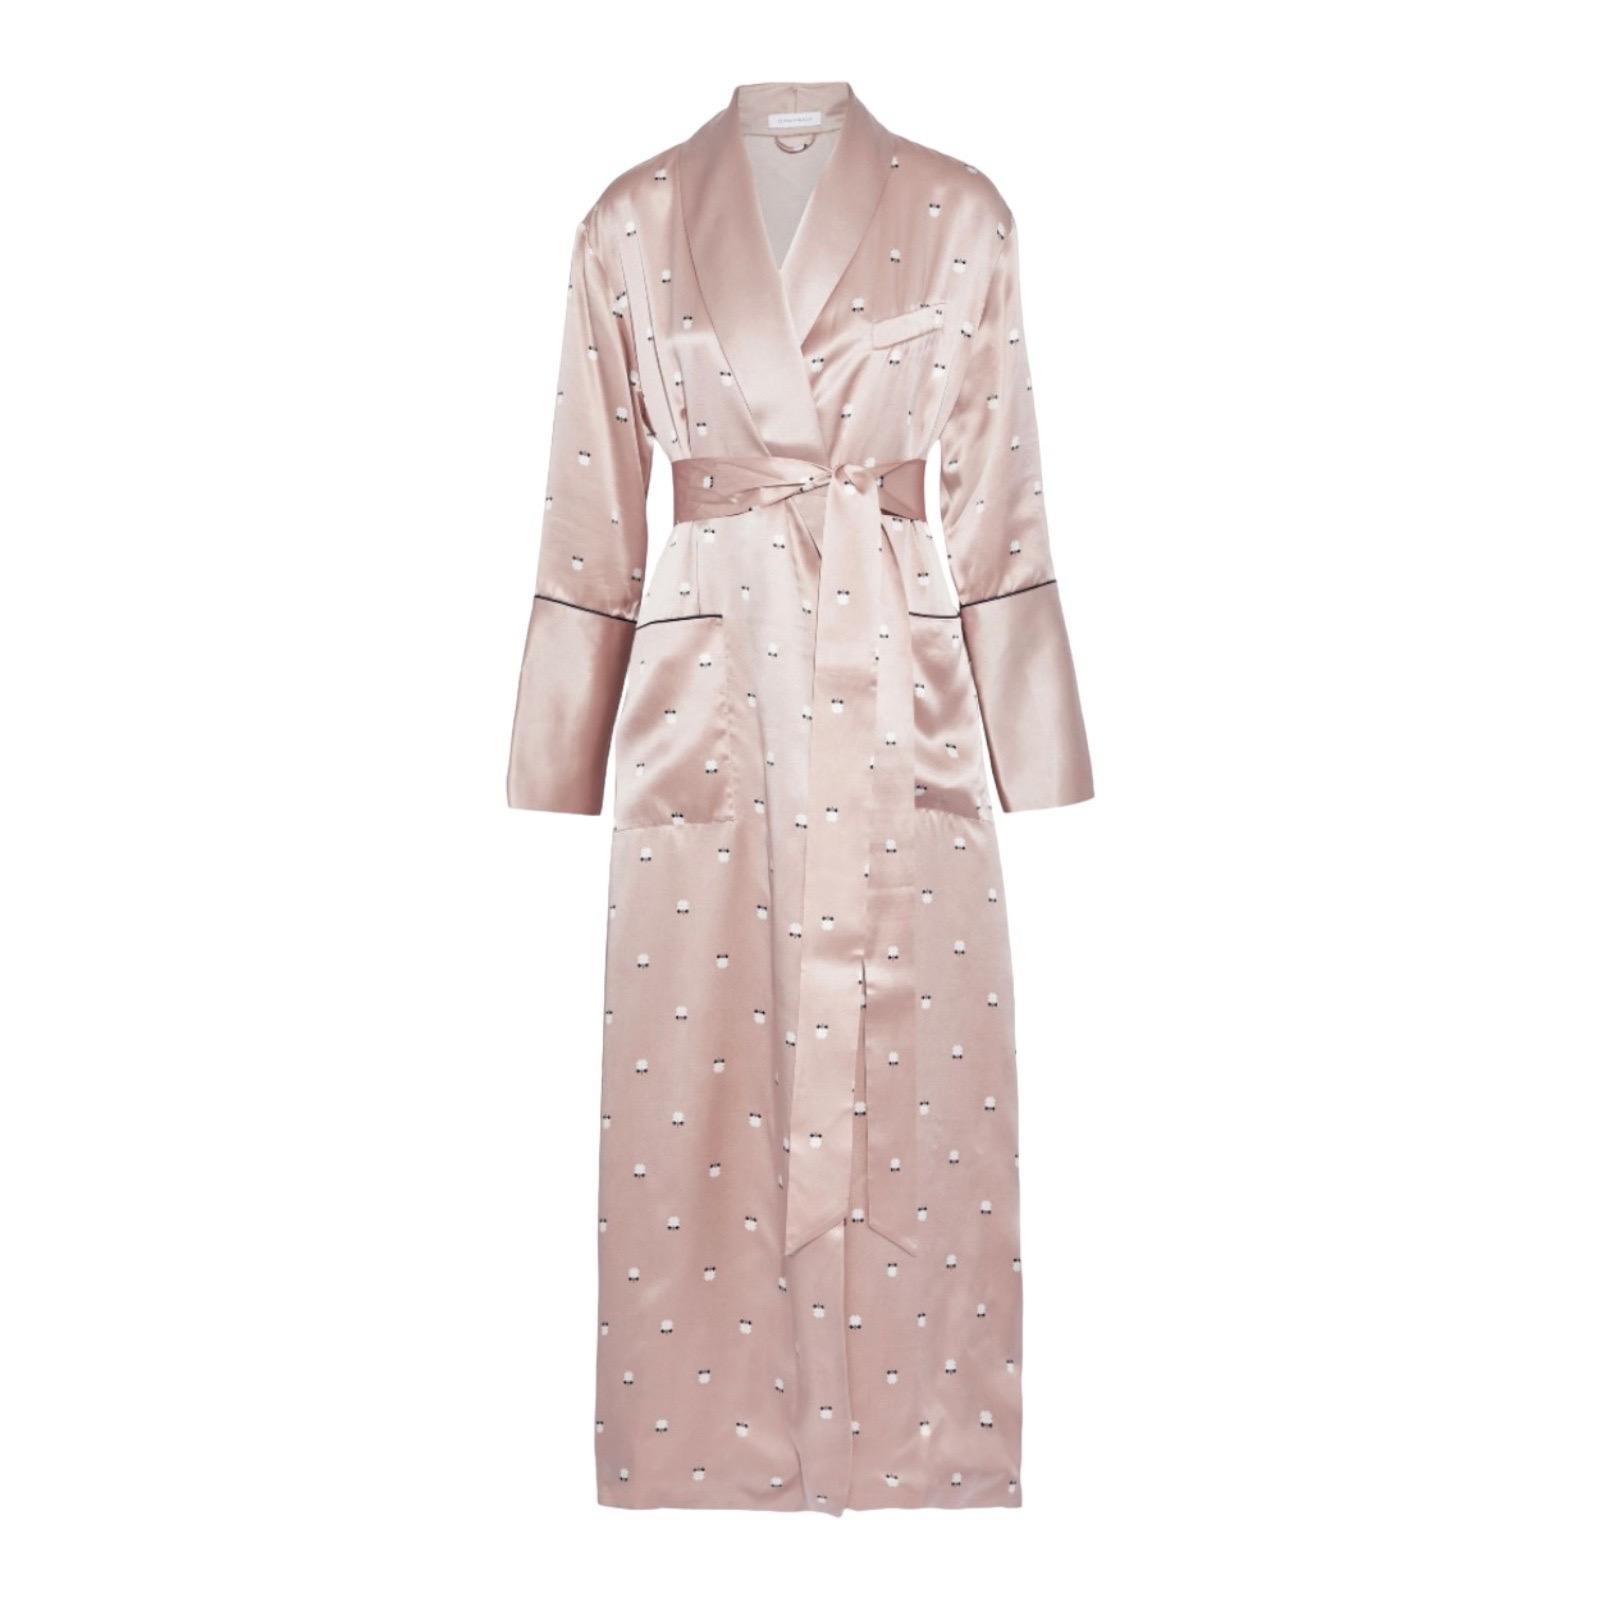 NEW Olivia von Halle Blush Pink Printed Silk Dressing Gown Robe M/L For Sale